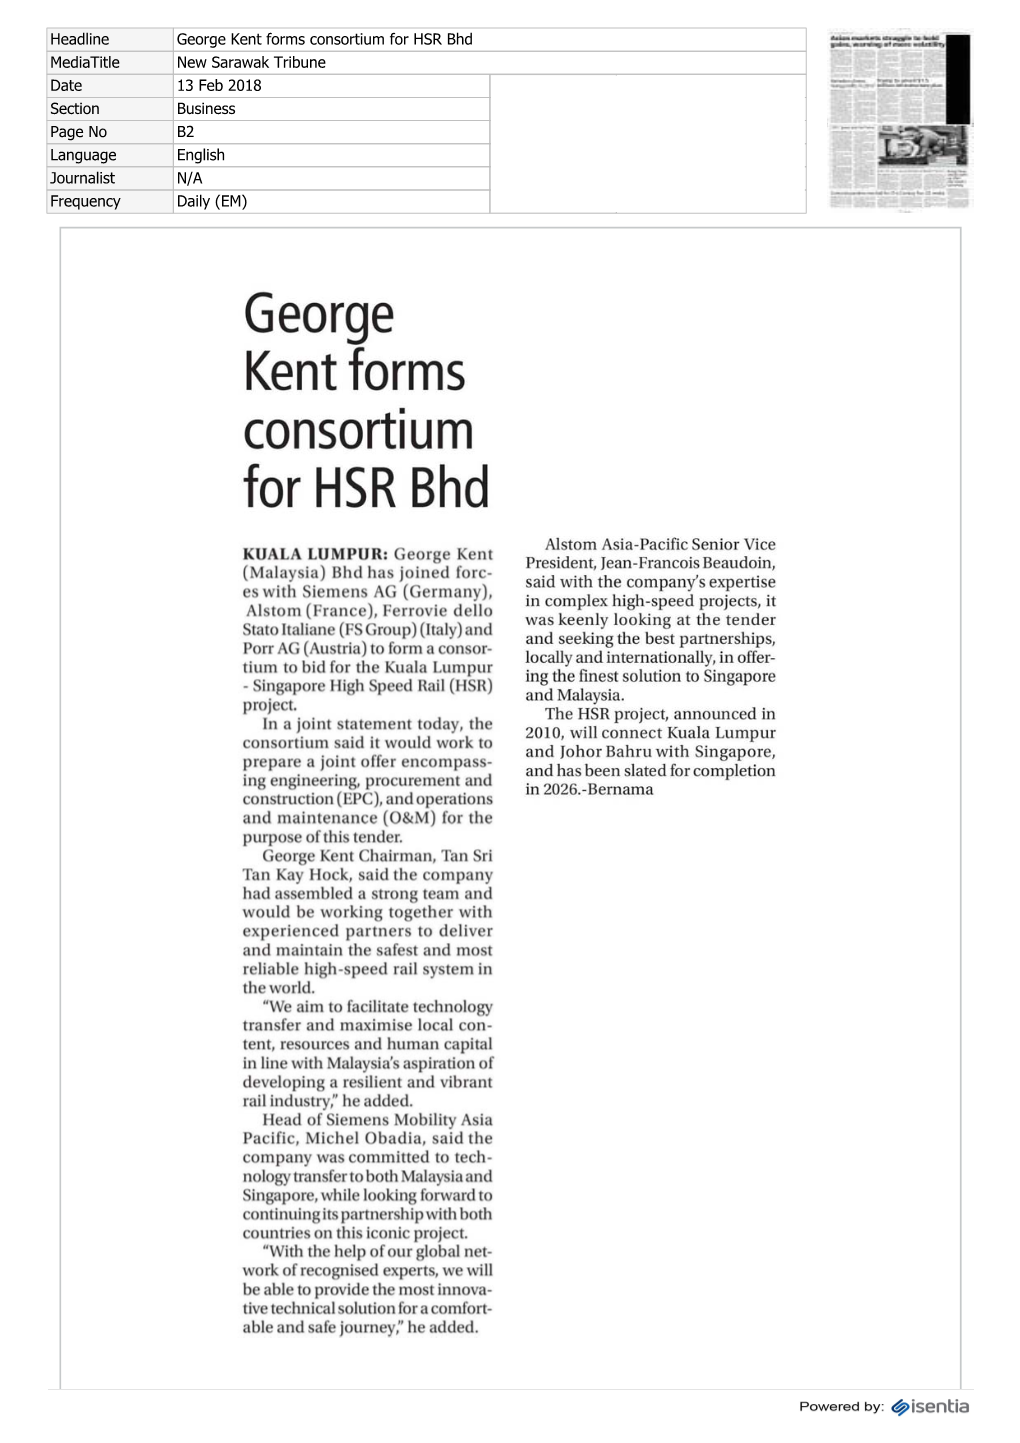 New Sarawak Tribune-George Kent Forms Consortium for HSR